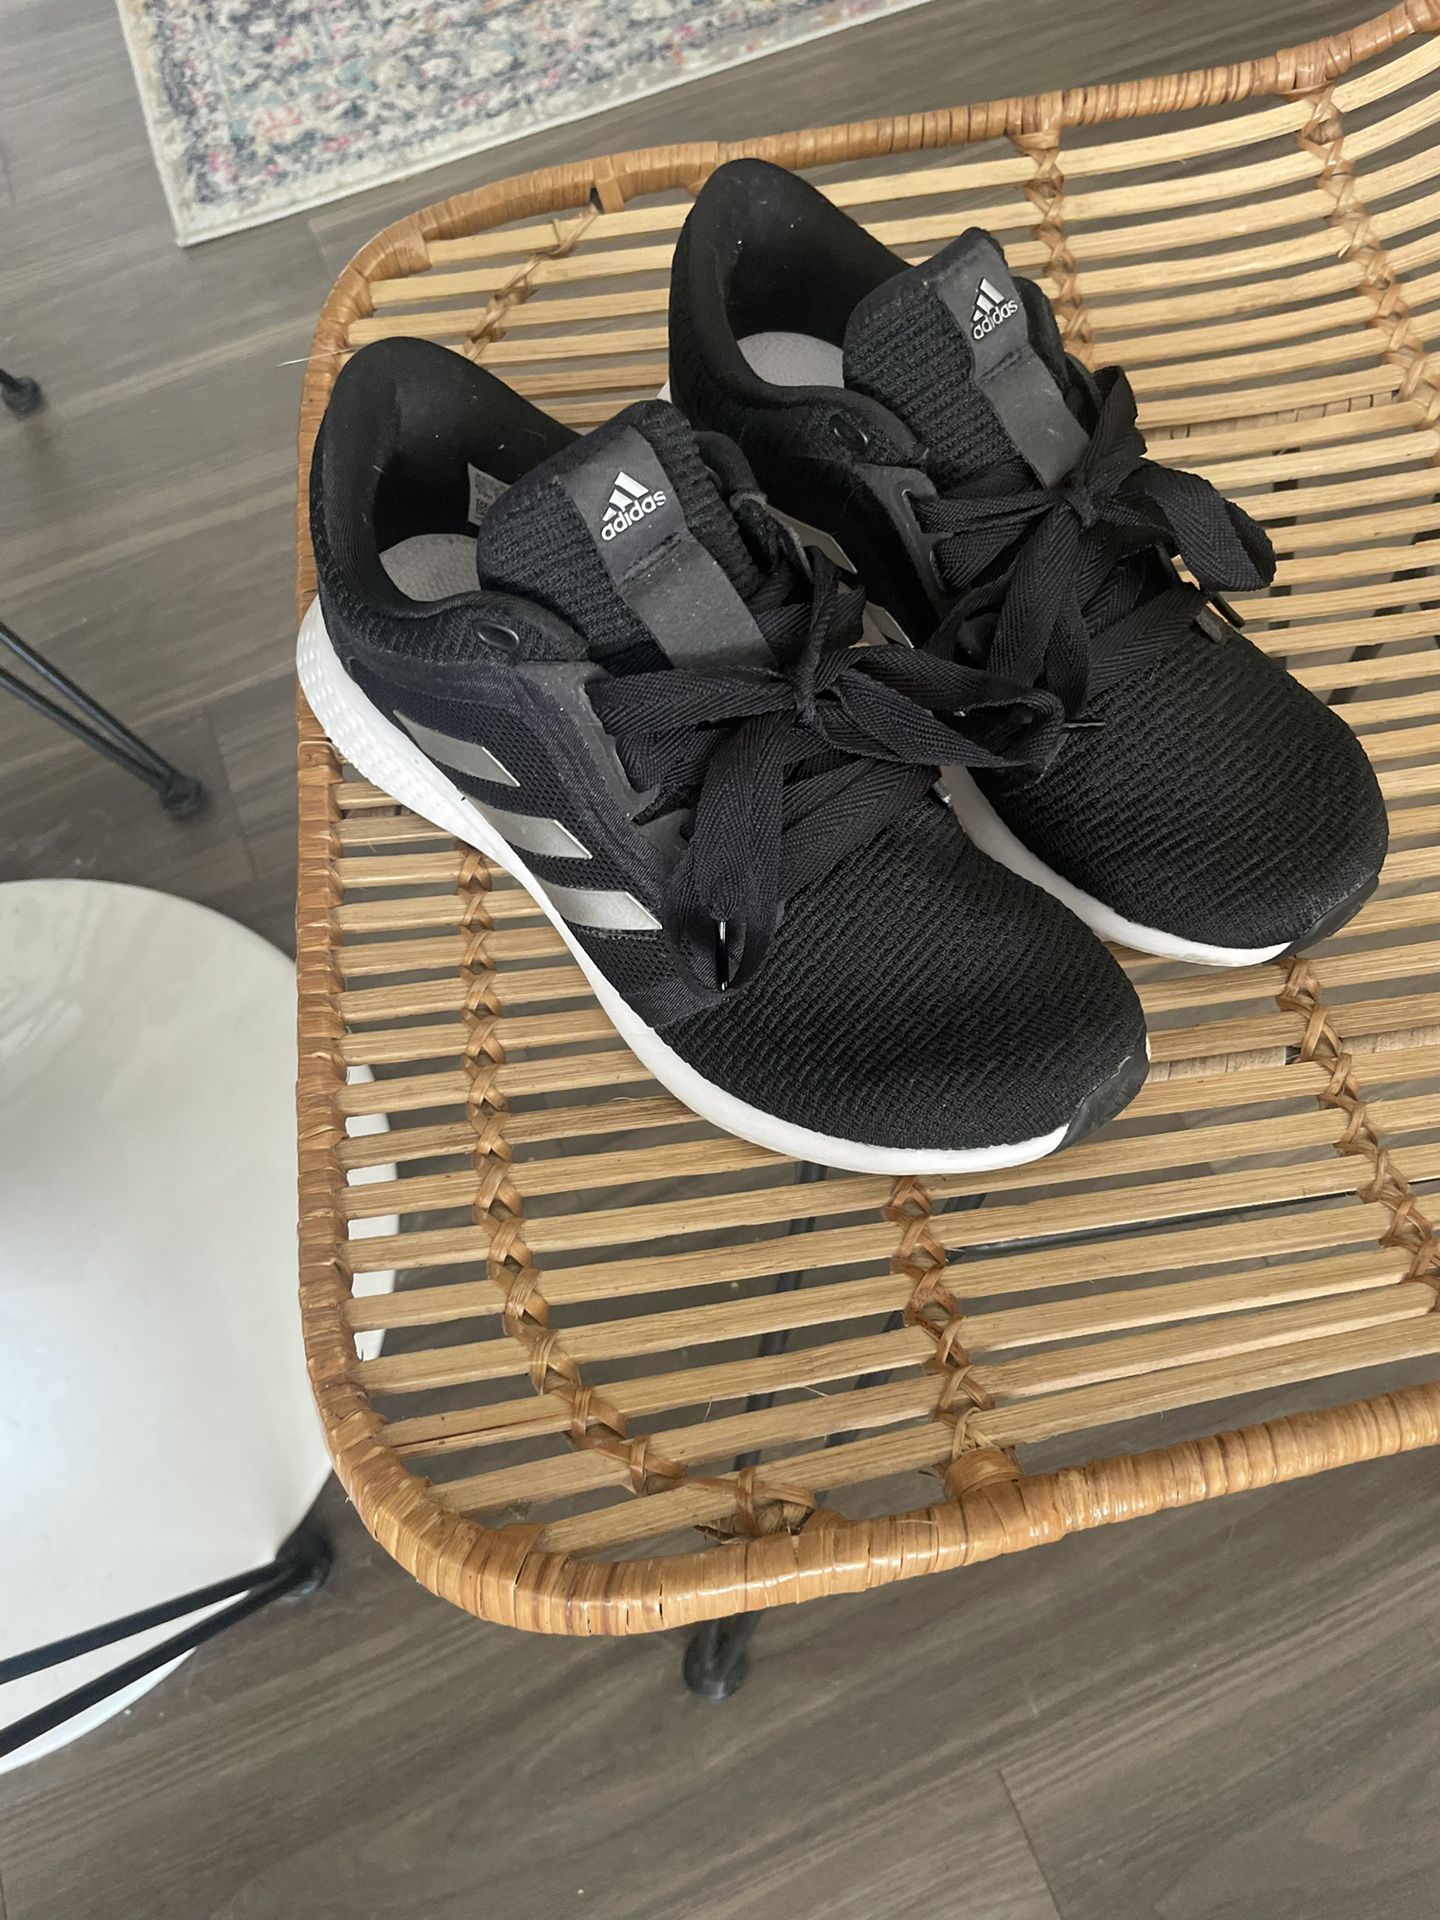 Women’s Black Adidas Shoes (size 6.5)